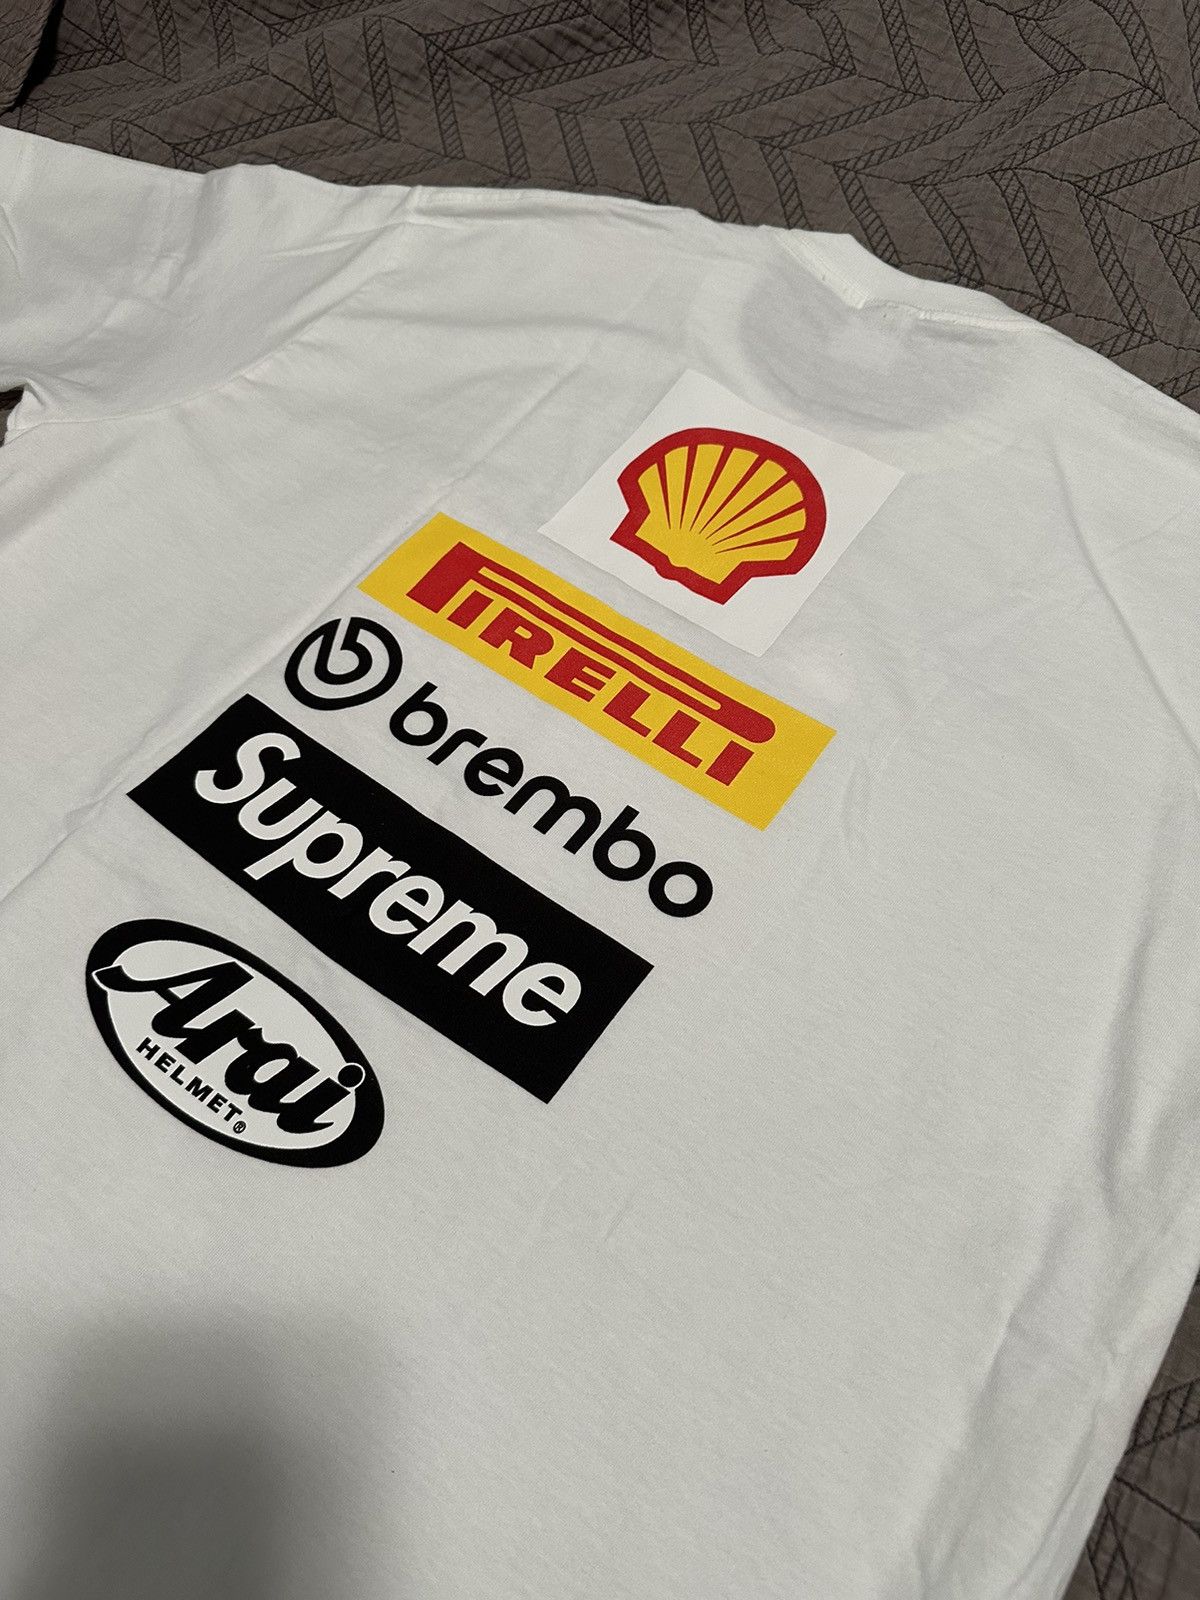 Supreme Supreme x Ducati Logos Tee | Grailed